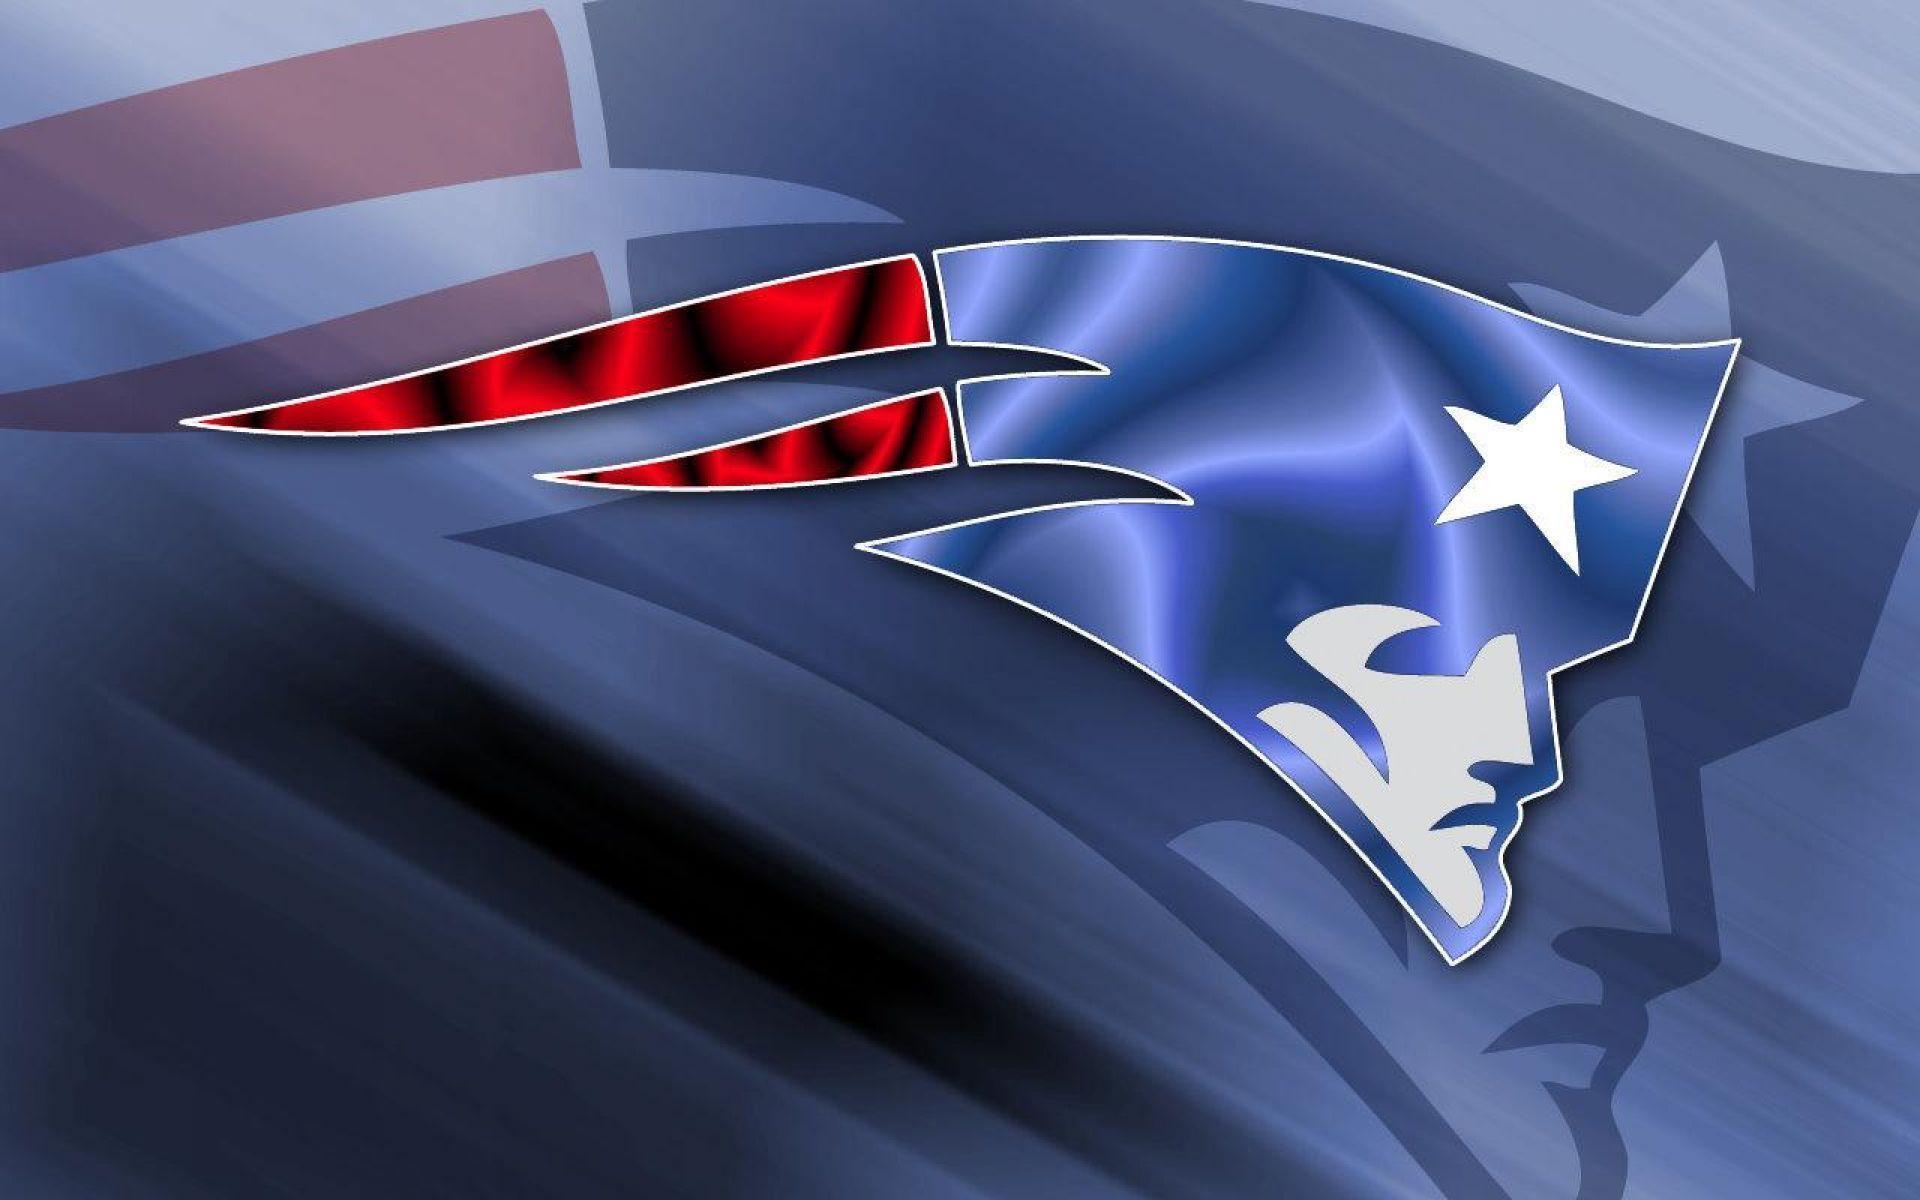 New England Patriots Wallpaper HD. HD Wallpaper, Background